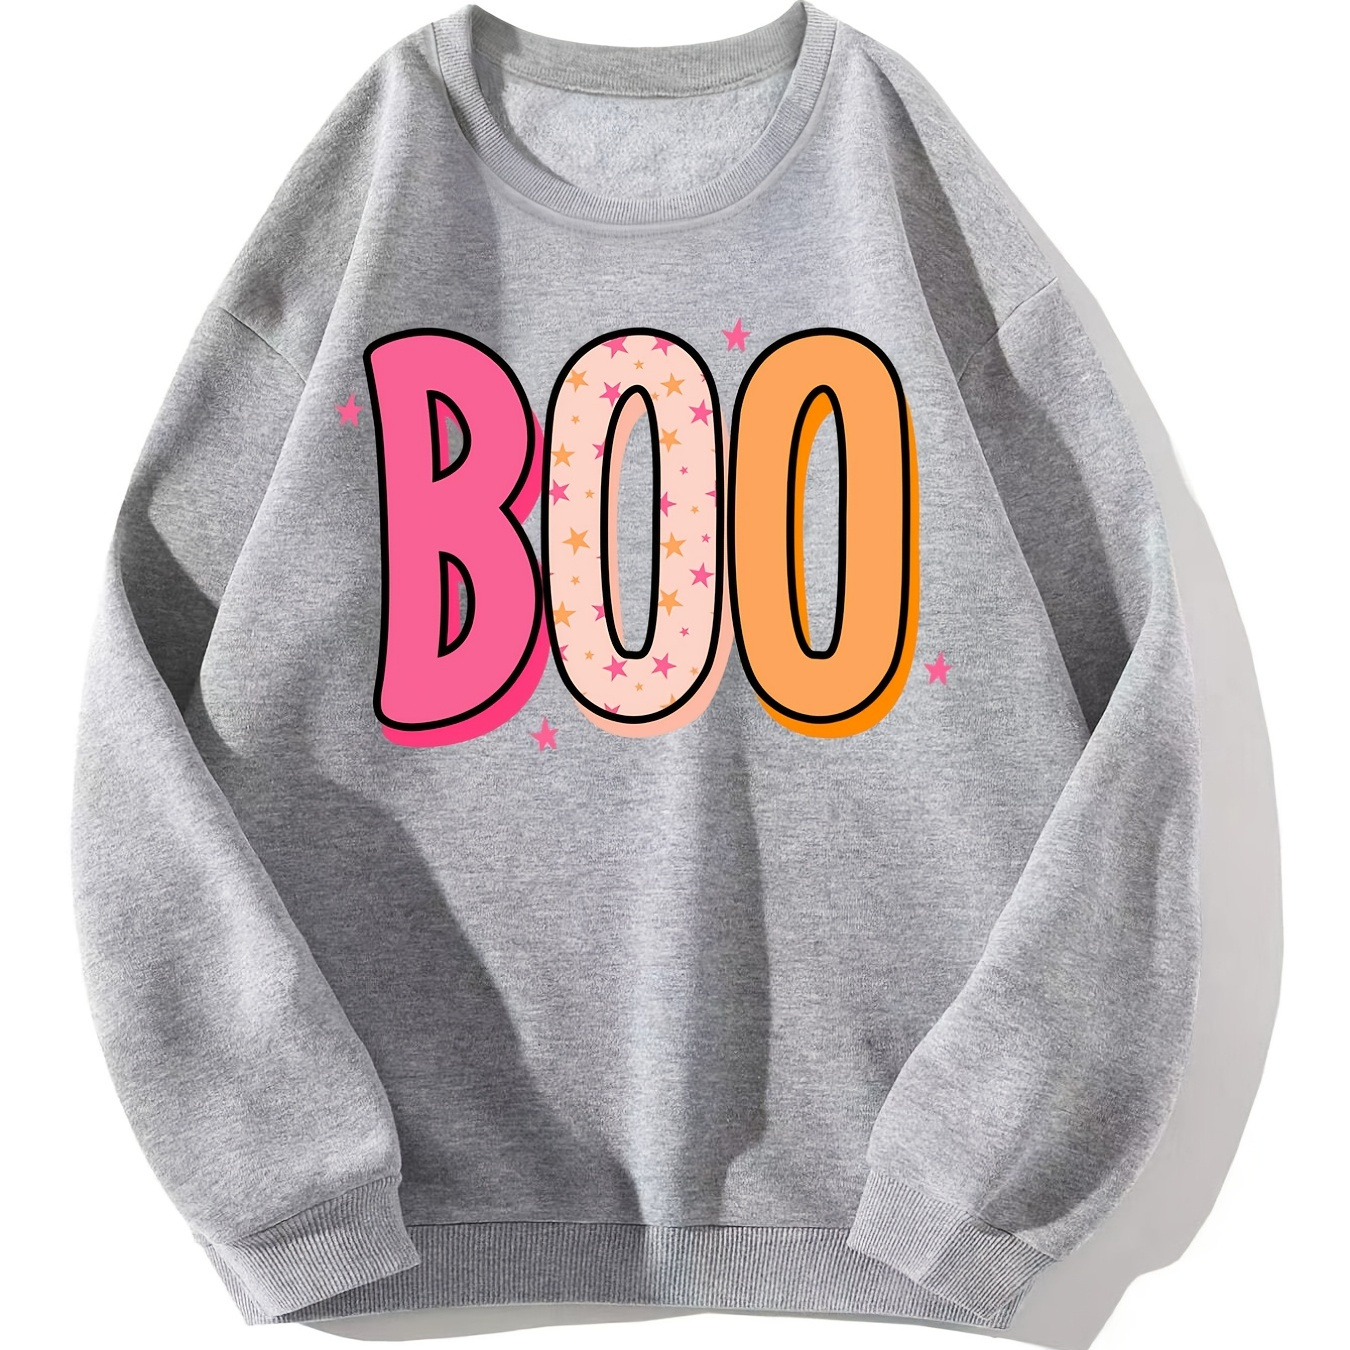 

Boo Print Sweatshirt, Casual Long Sleeve Crew Neck Sweatshirt For Fall & Winter, Women's Clothing